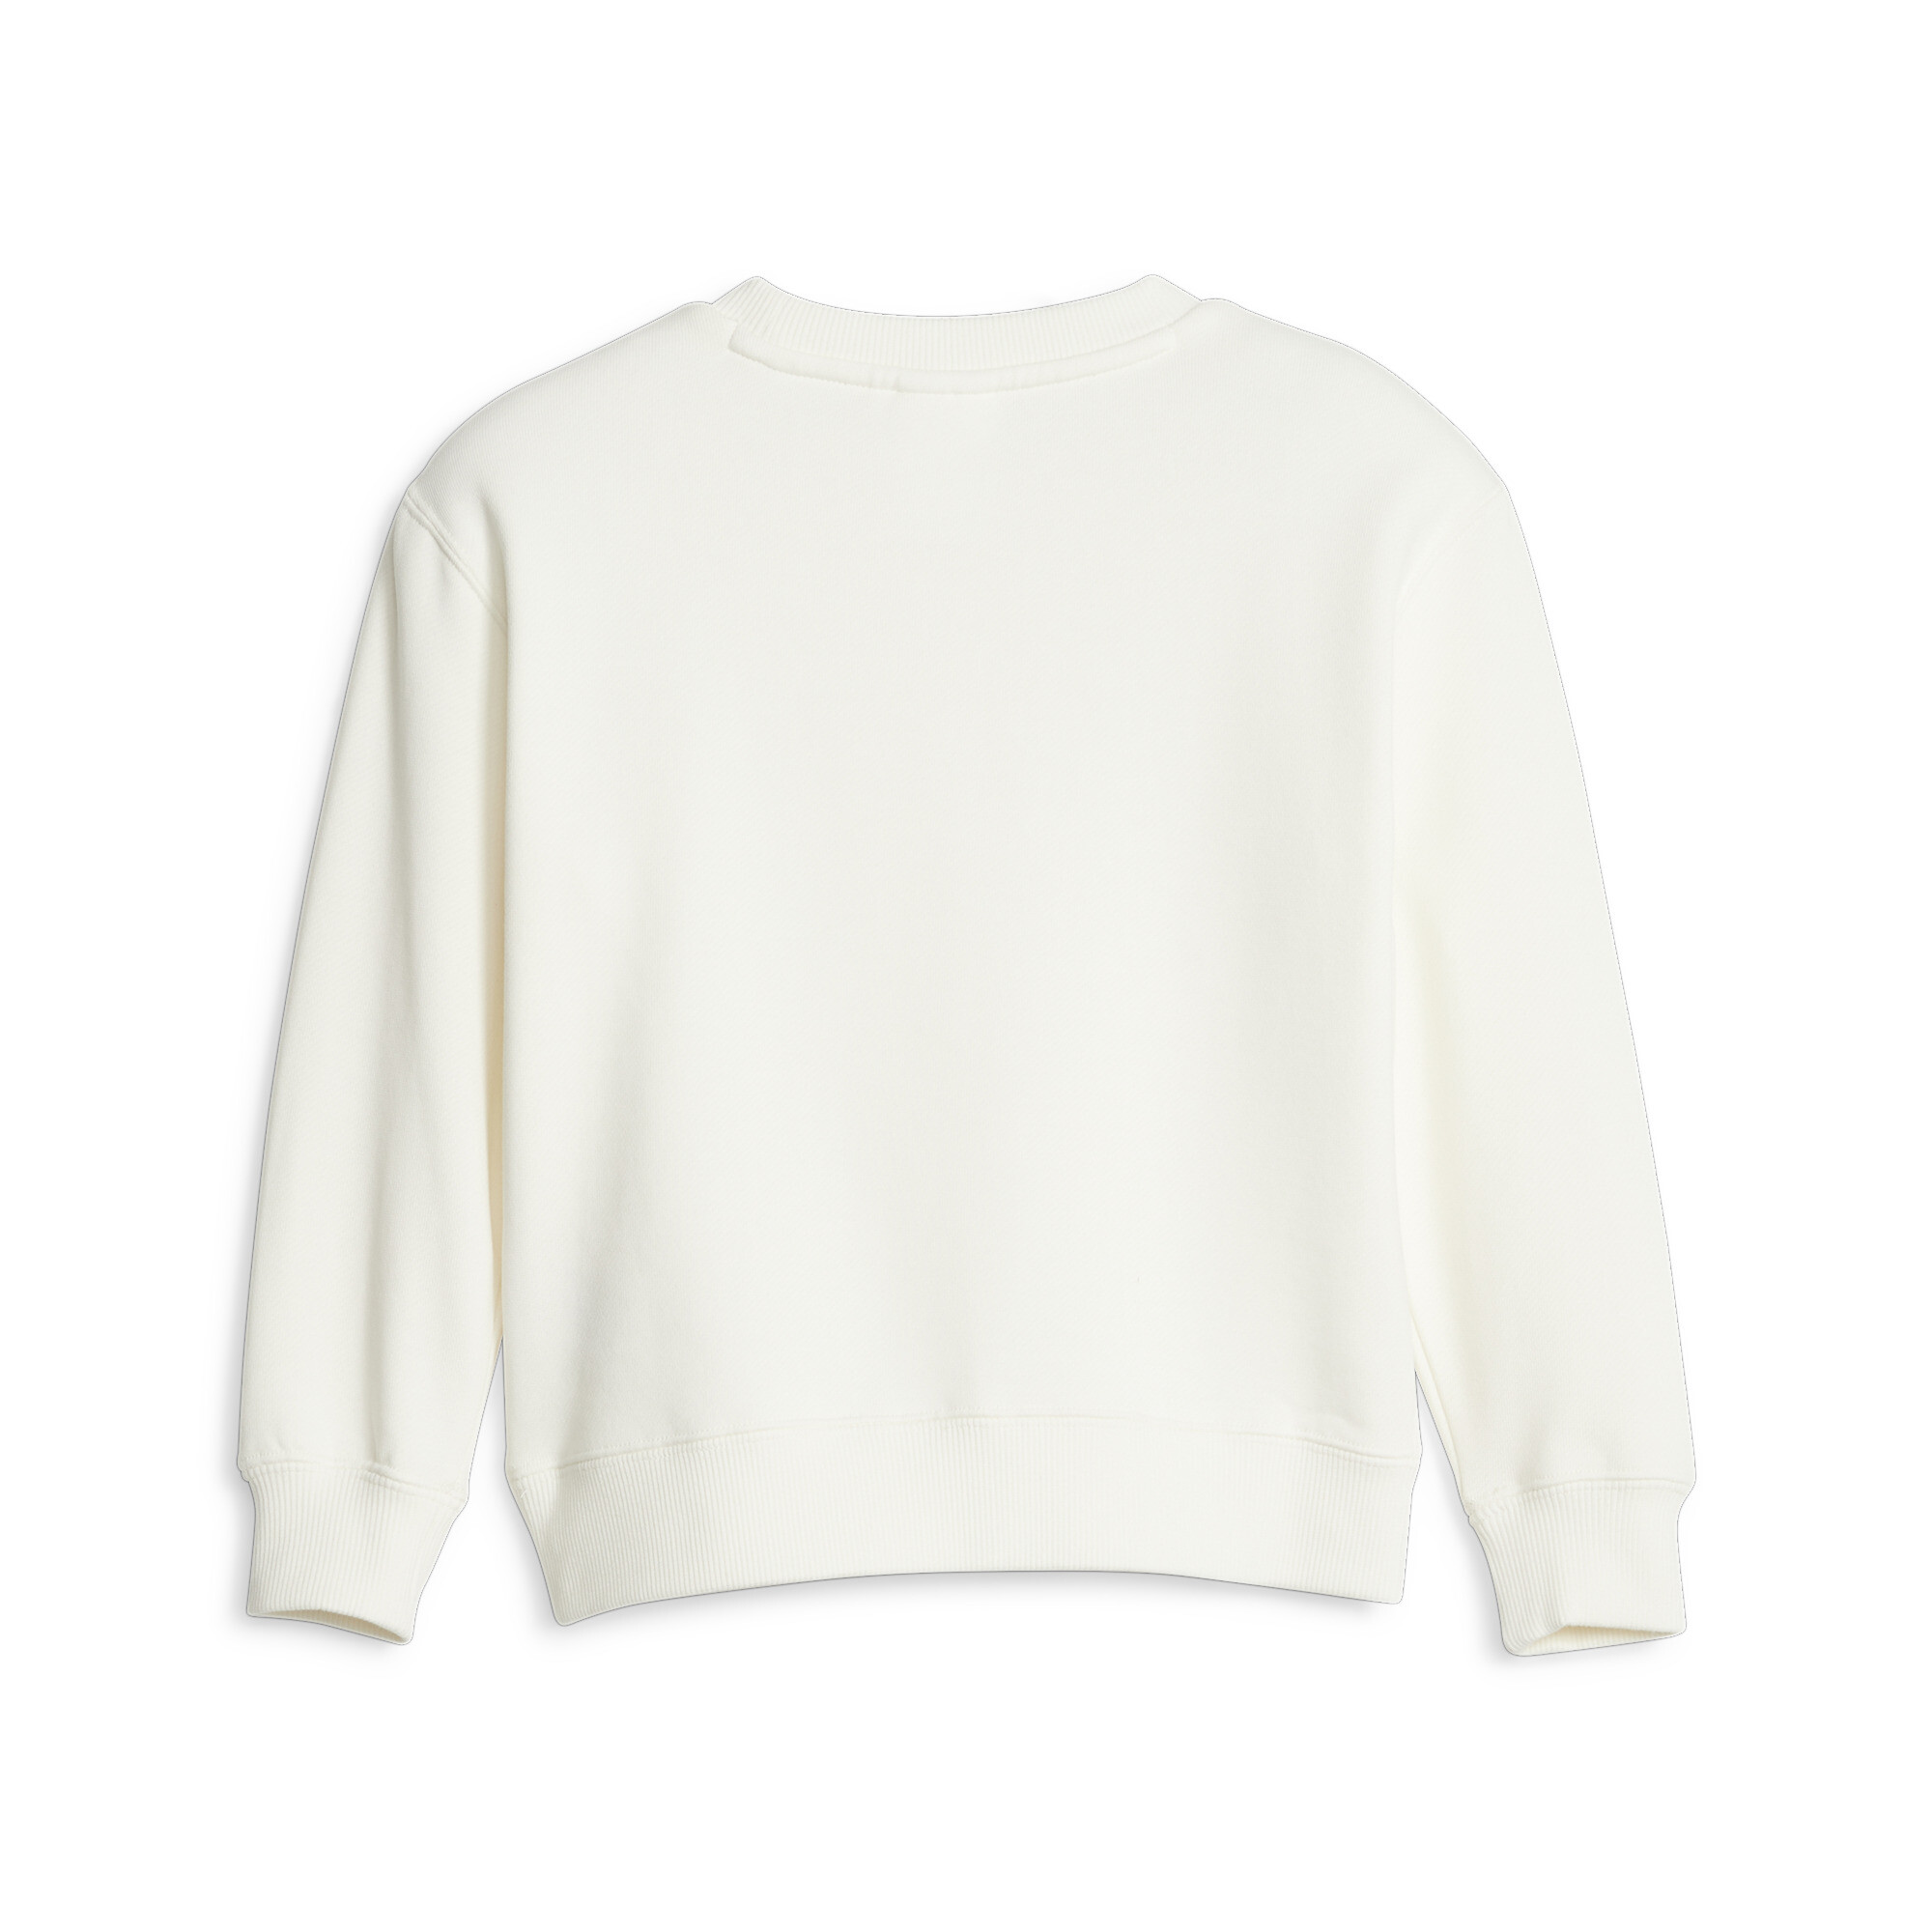 PUMA X LIBERTY Sweatshirt In White, Size 9-10 Youth